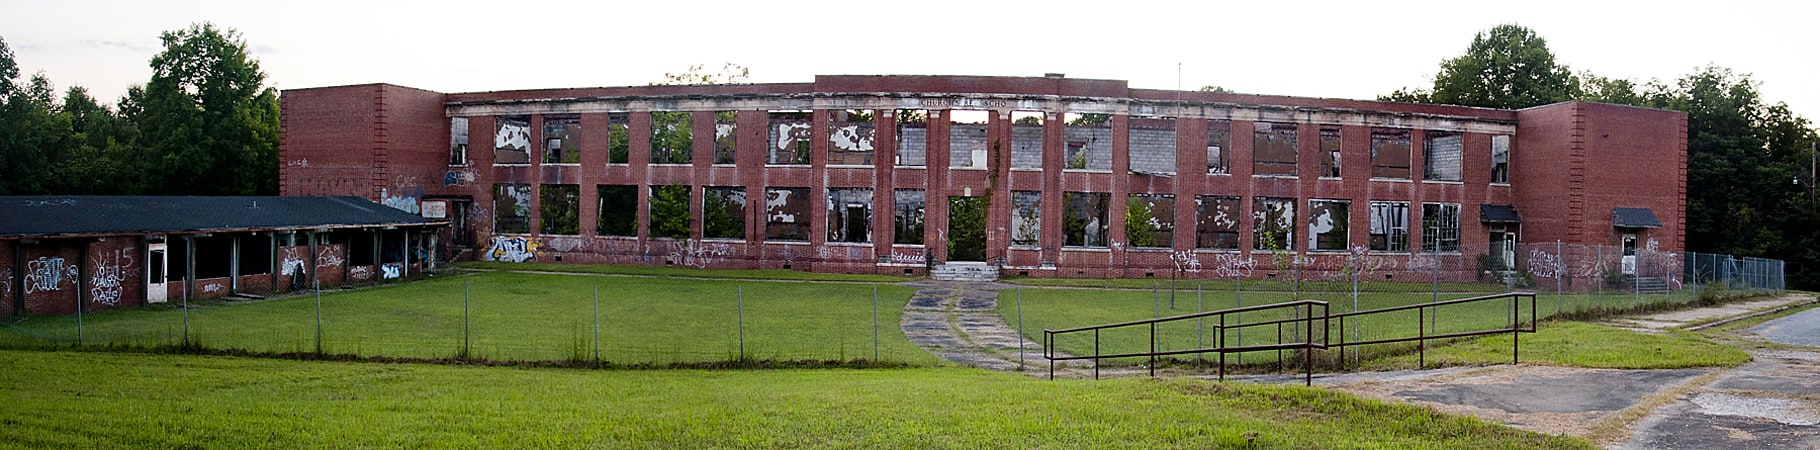 School in Thomasville, North Carolina